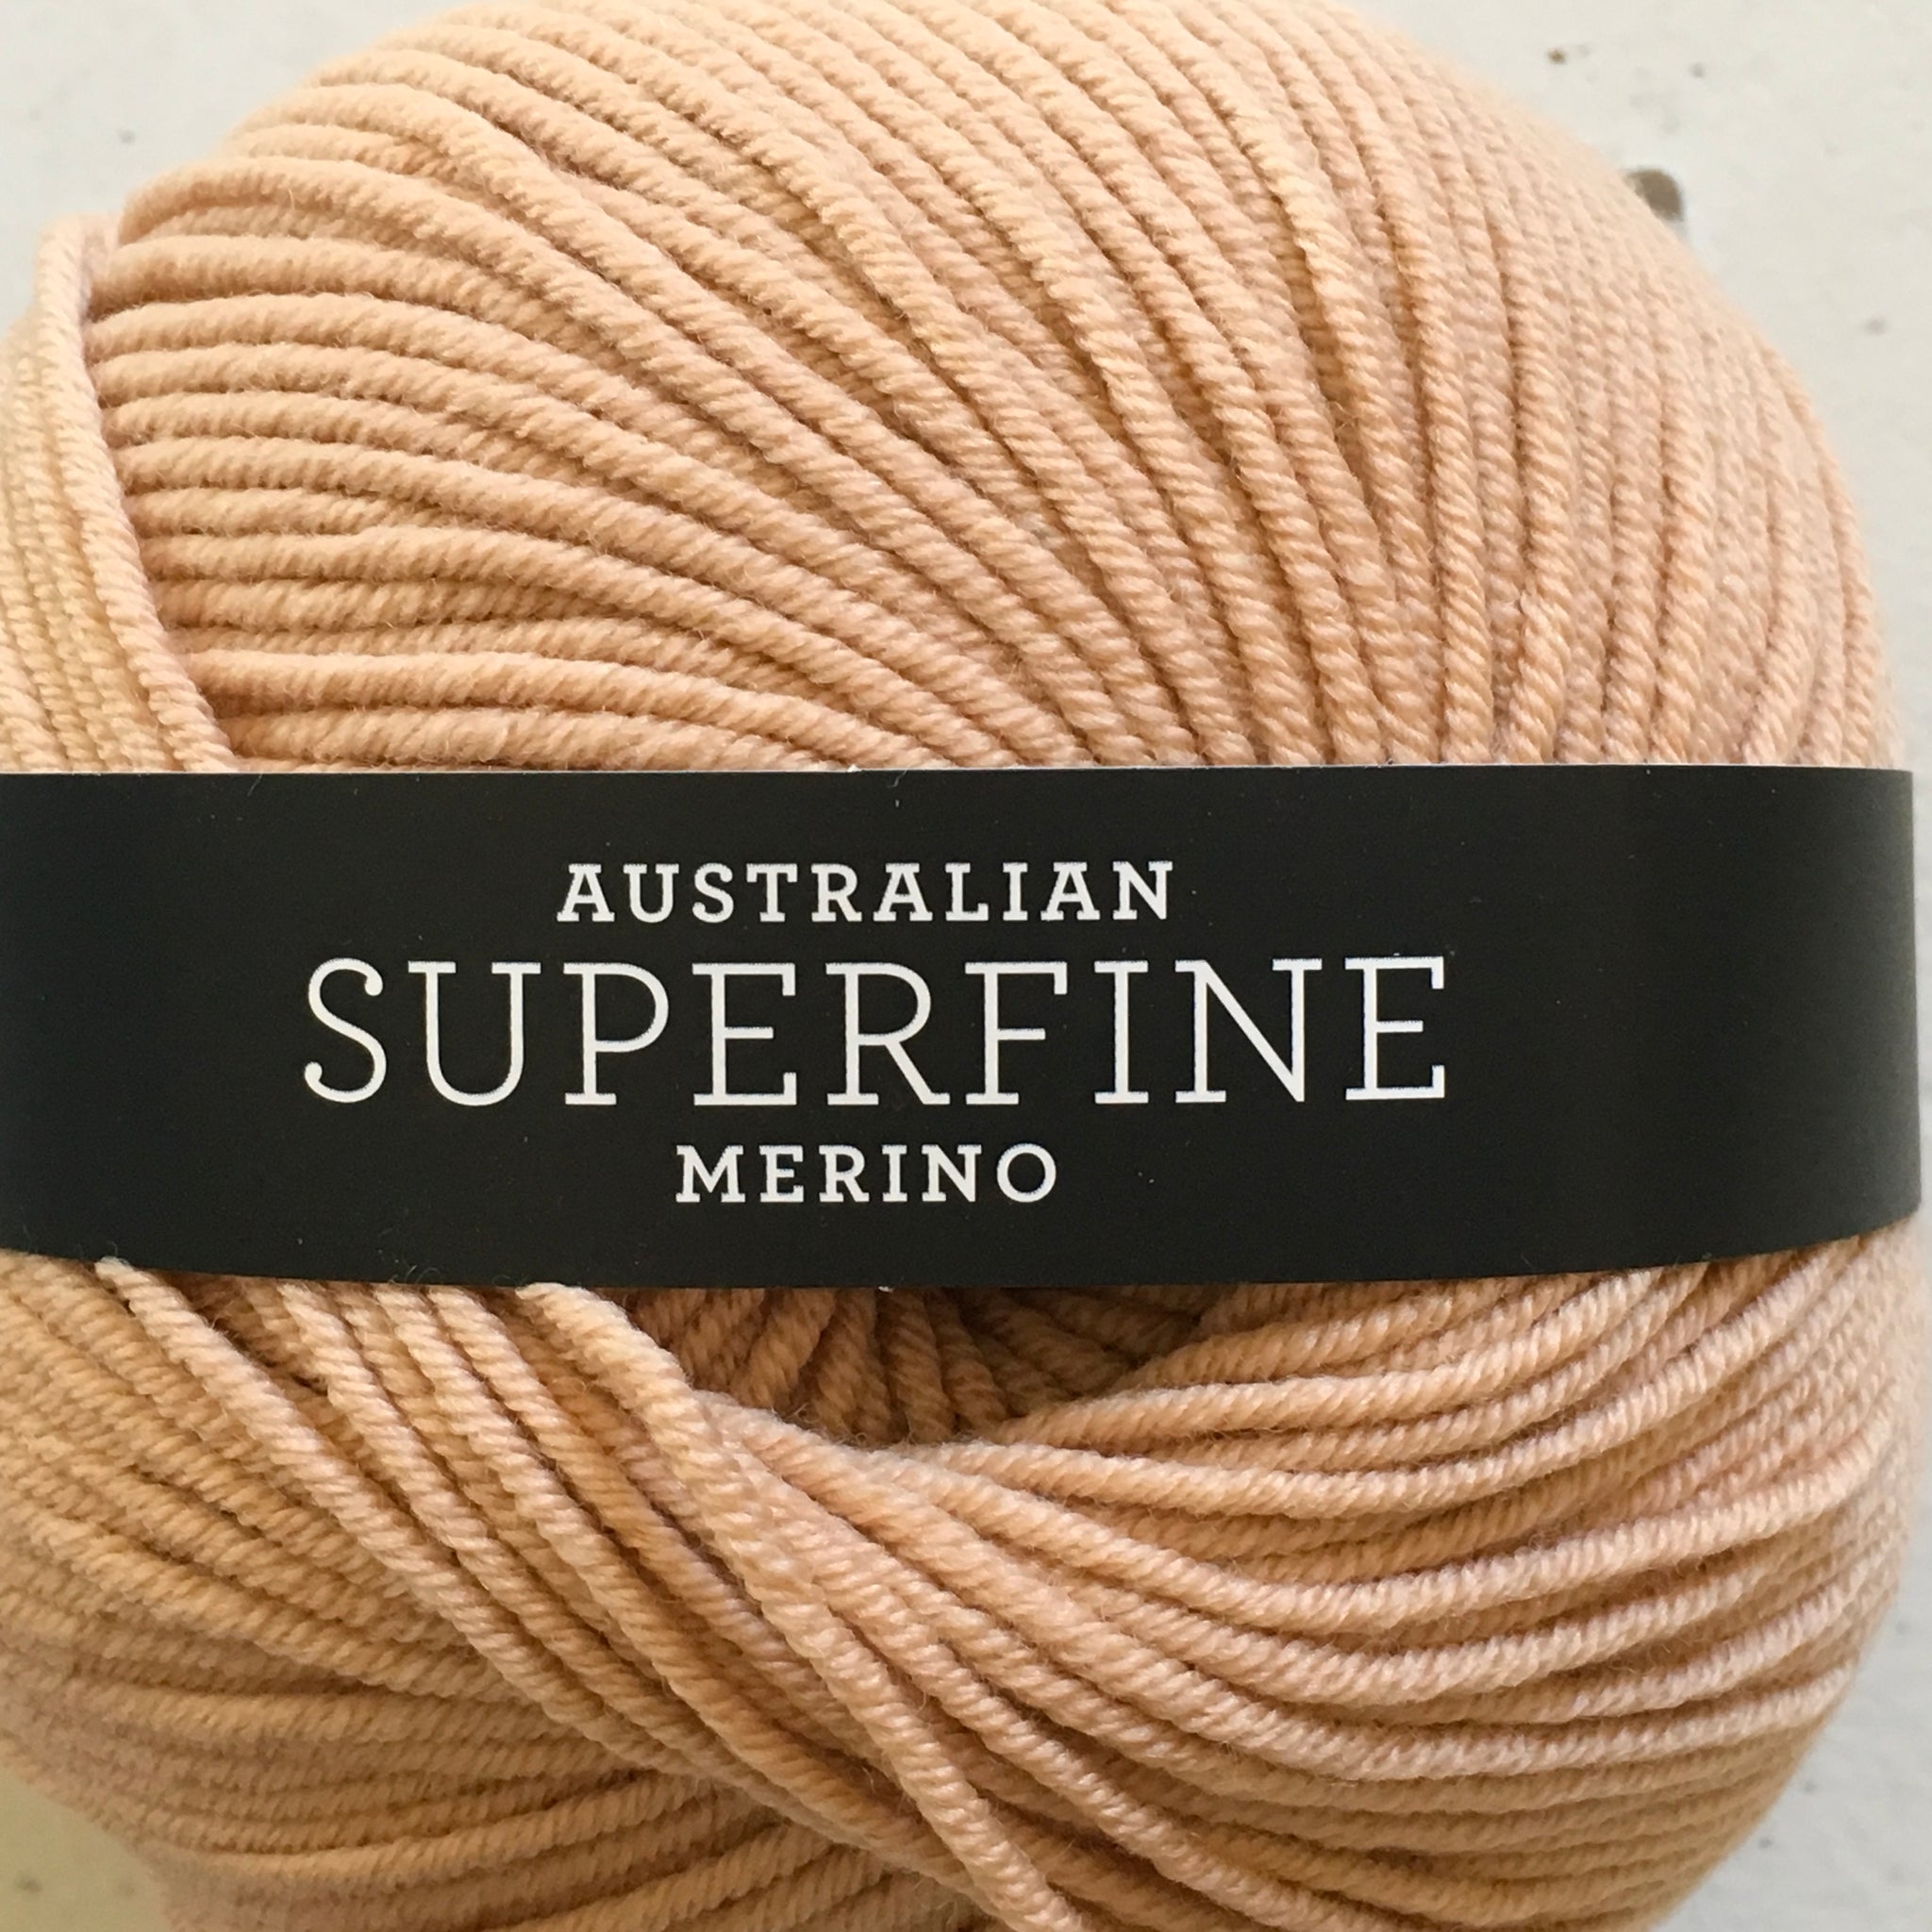 Australian Superfine Merino by Cleckheaton Knit & Filato